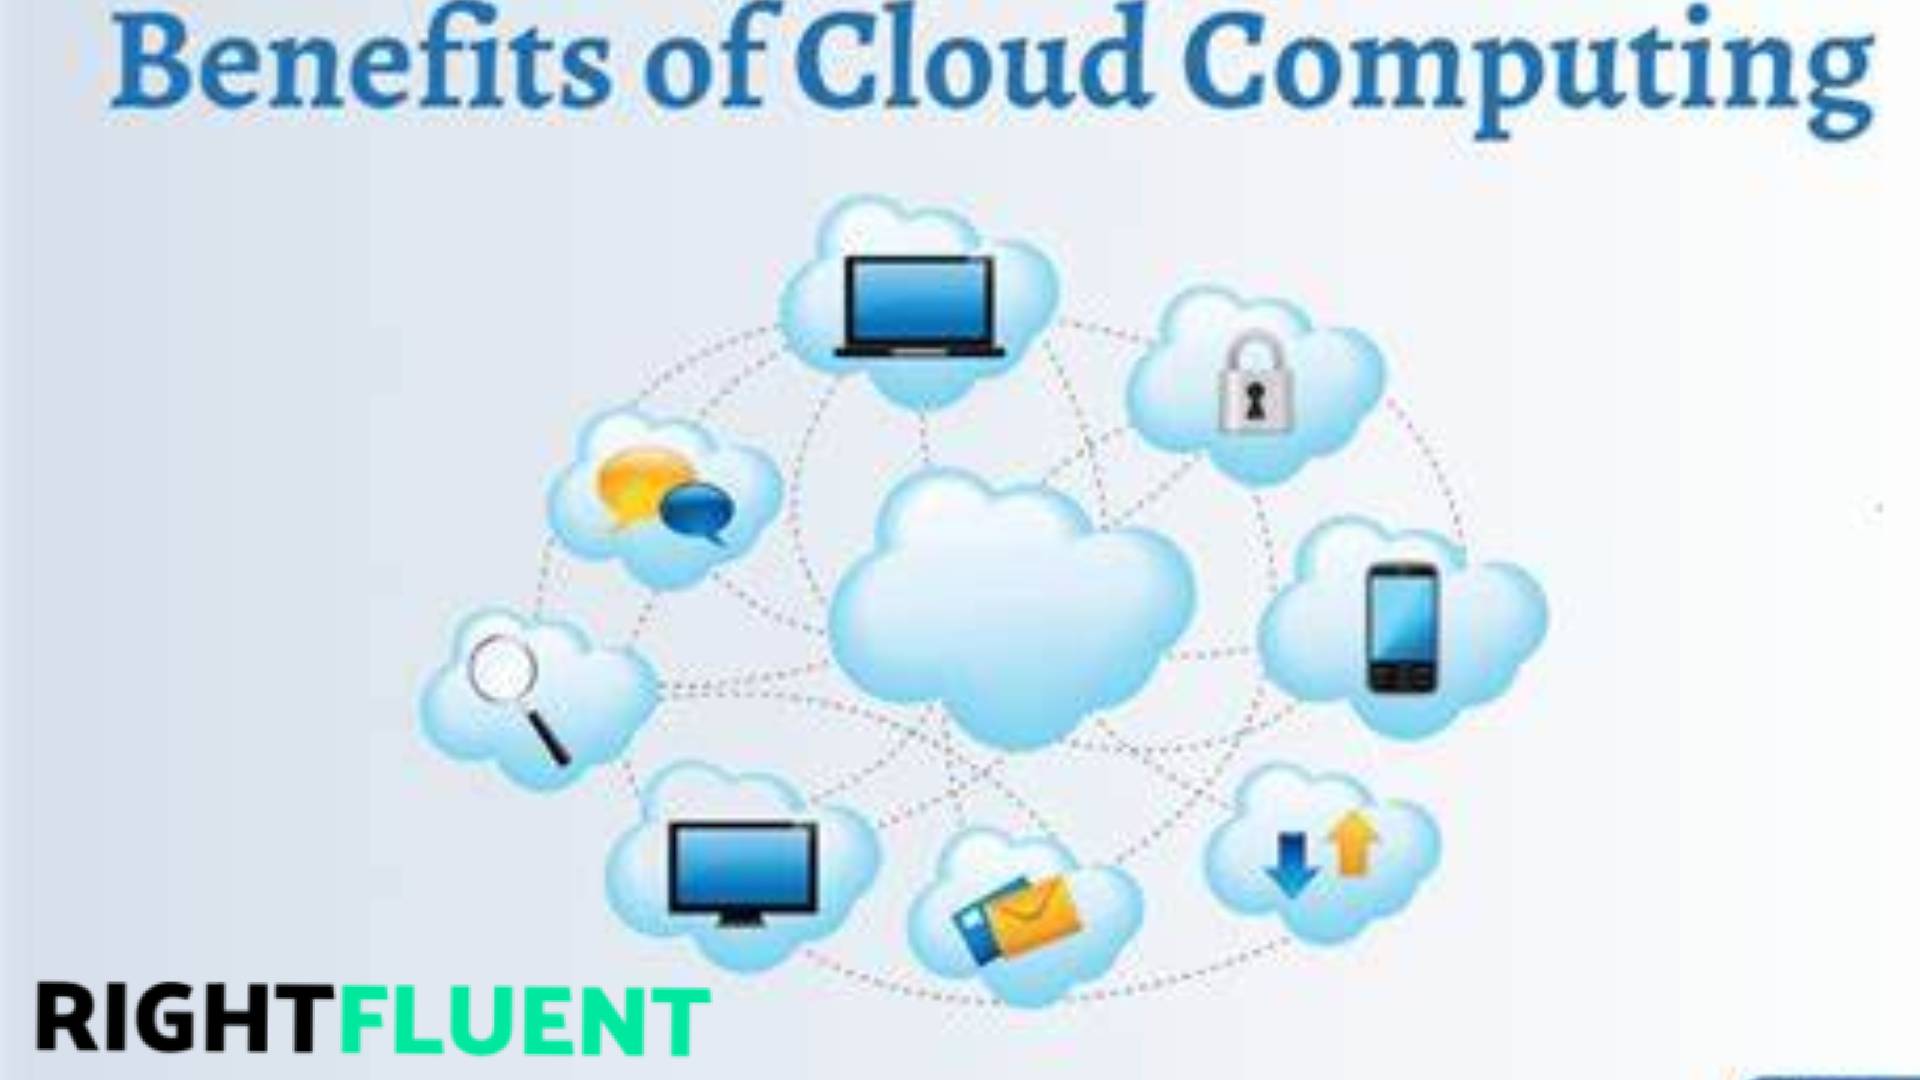 12 Cloud Based Computing Benefits